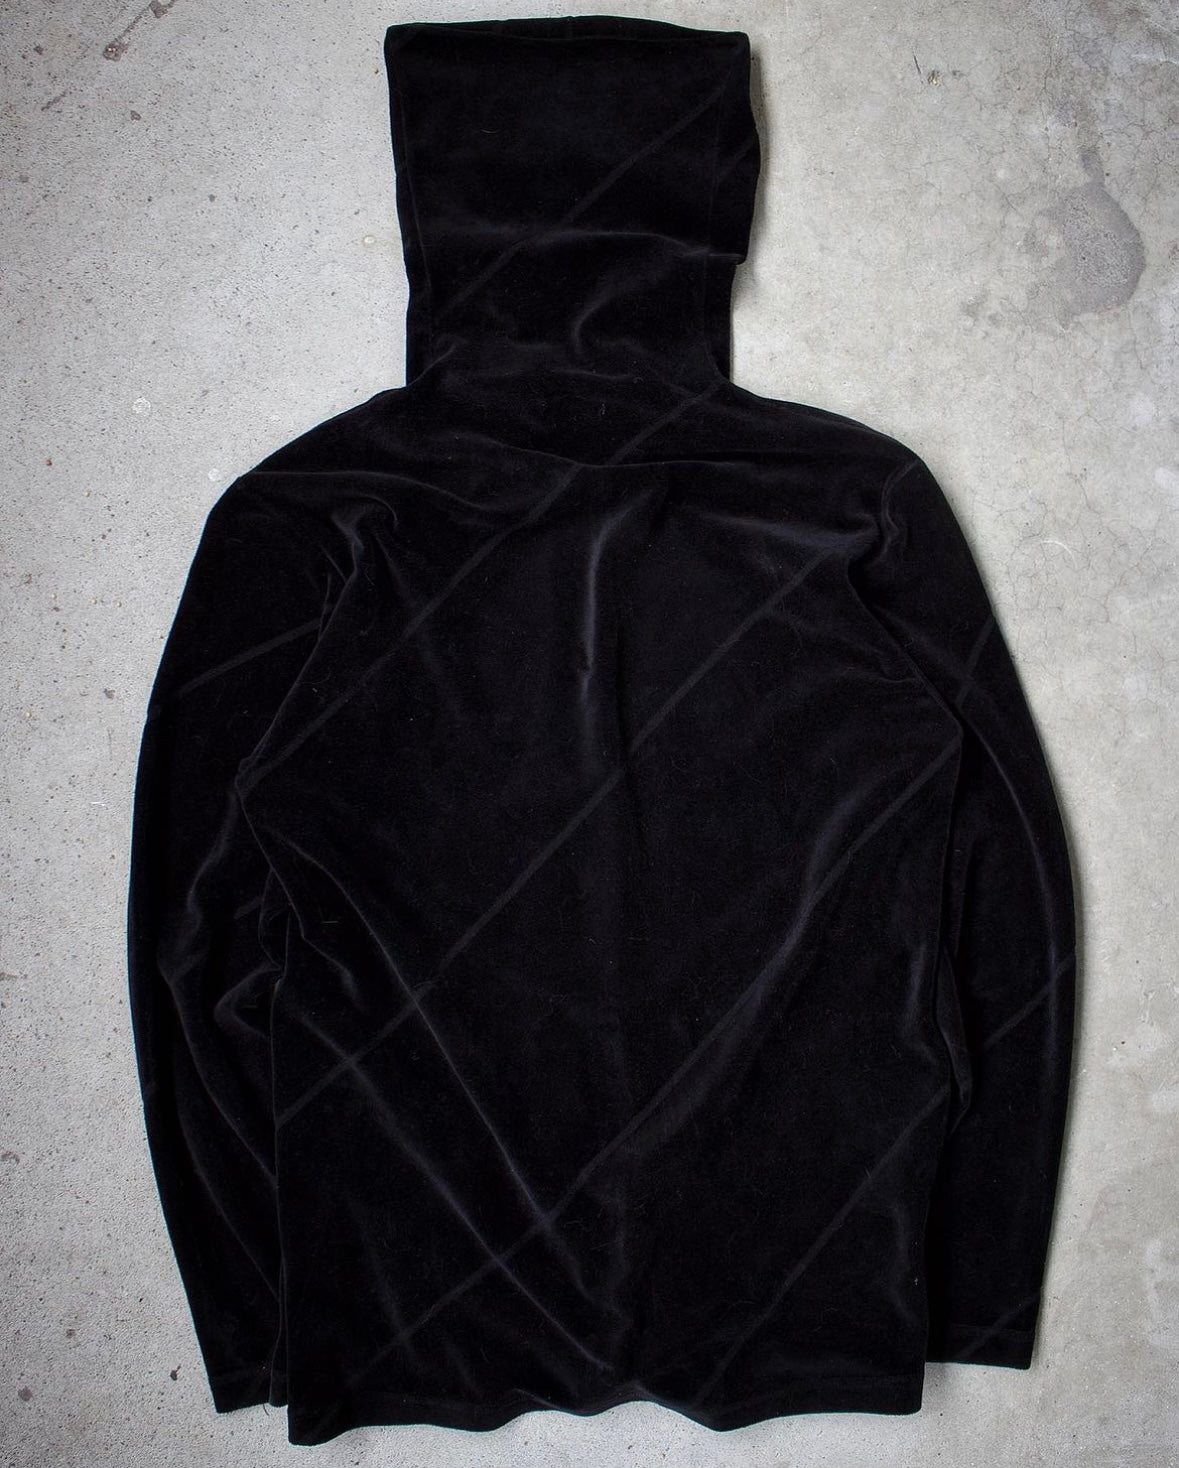 Lad Musician SS99 ‘New Wave’ Peeking Hood Velour Jacket